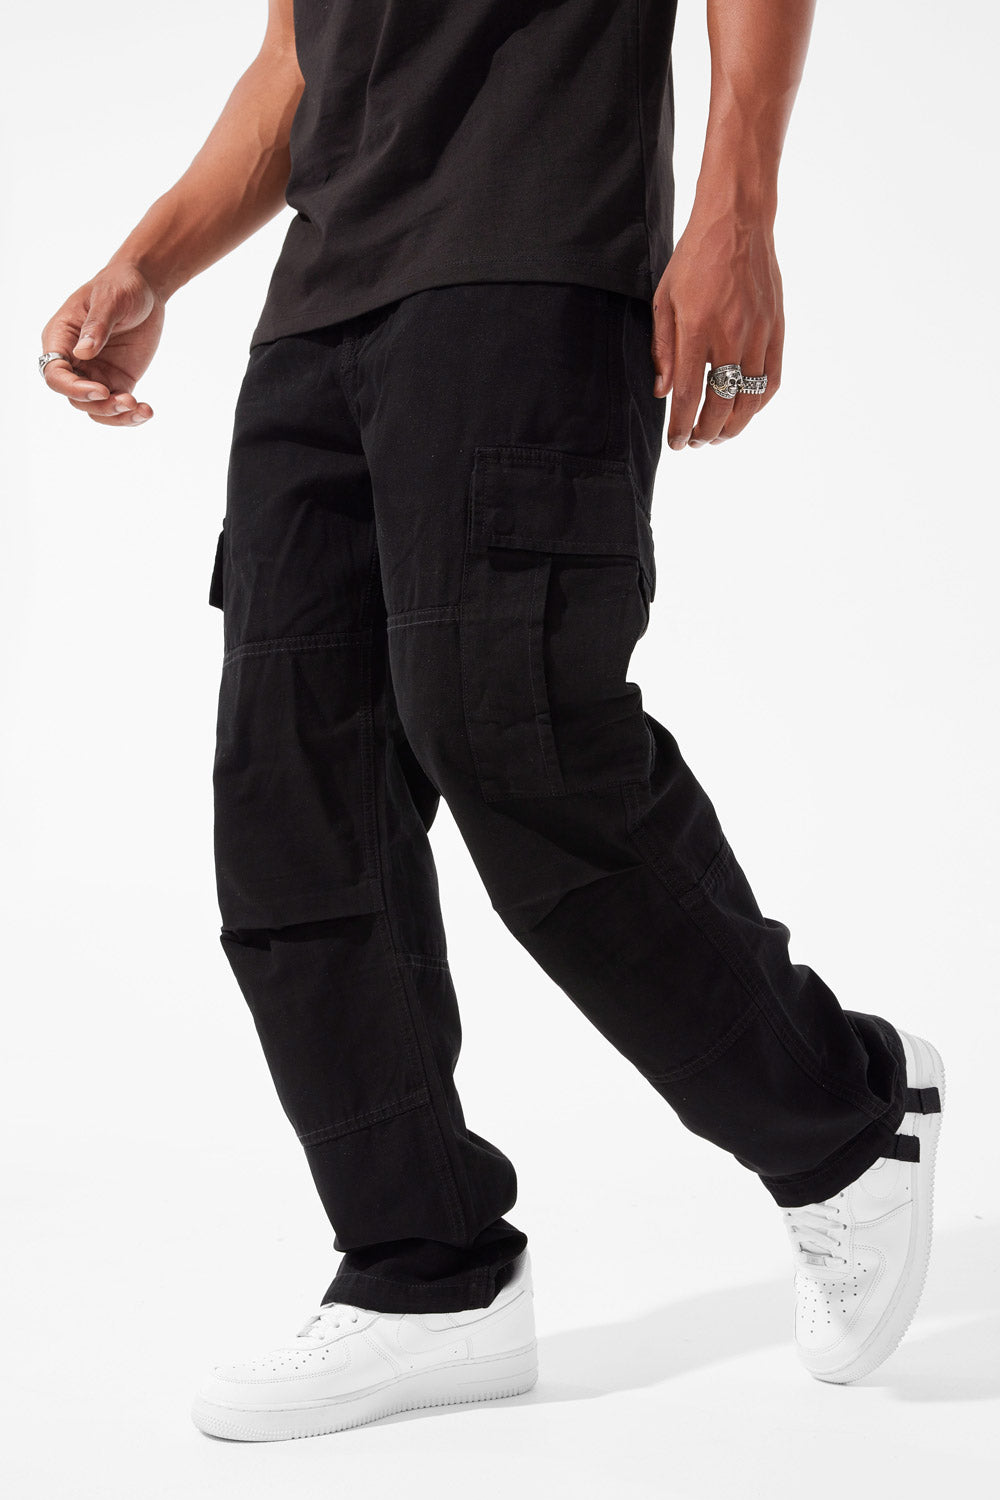 Brian - Airwalk Cargo Pants (Black)